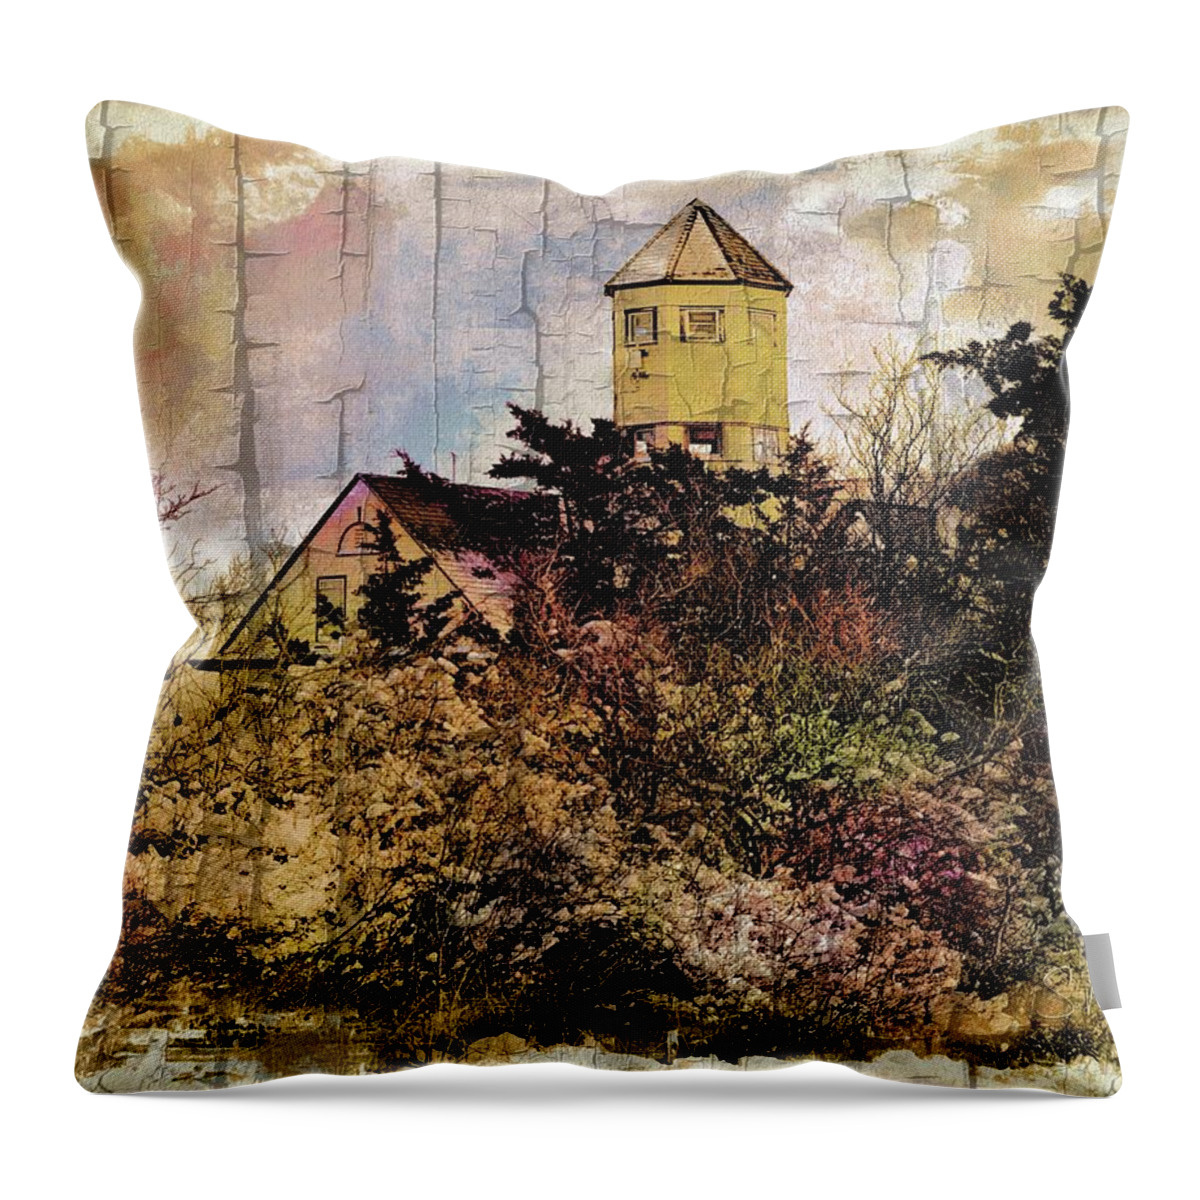 Landscape Throw Pillow featuring the digital art Island Beach 8 by Sami Martin